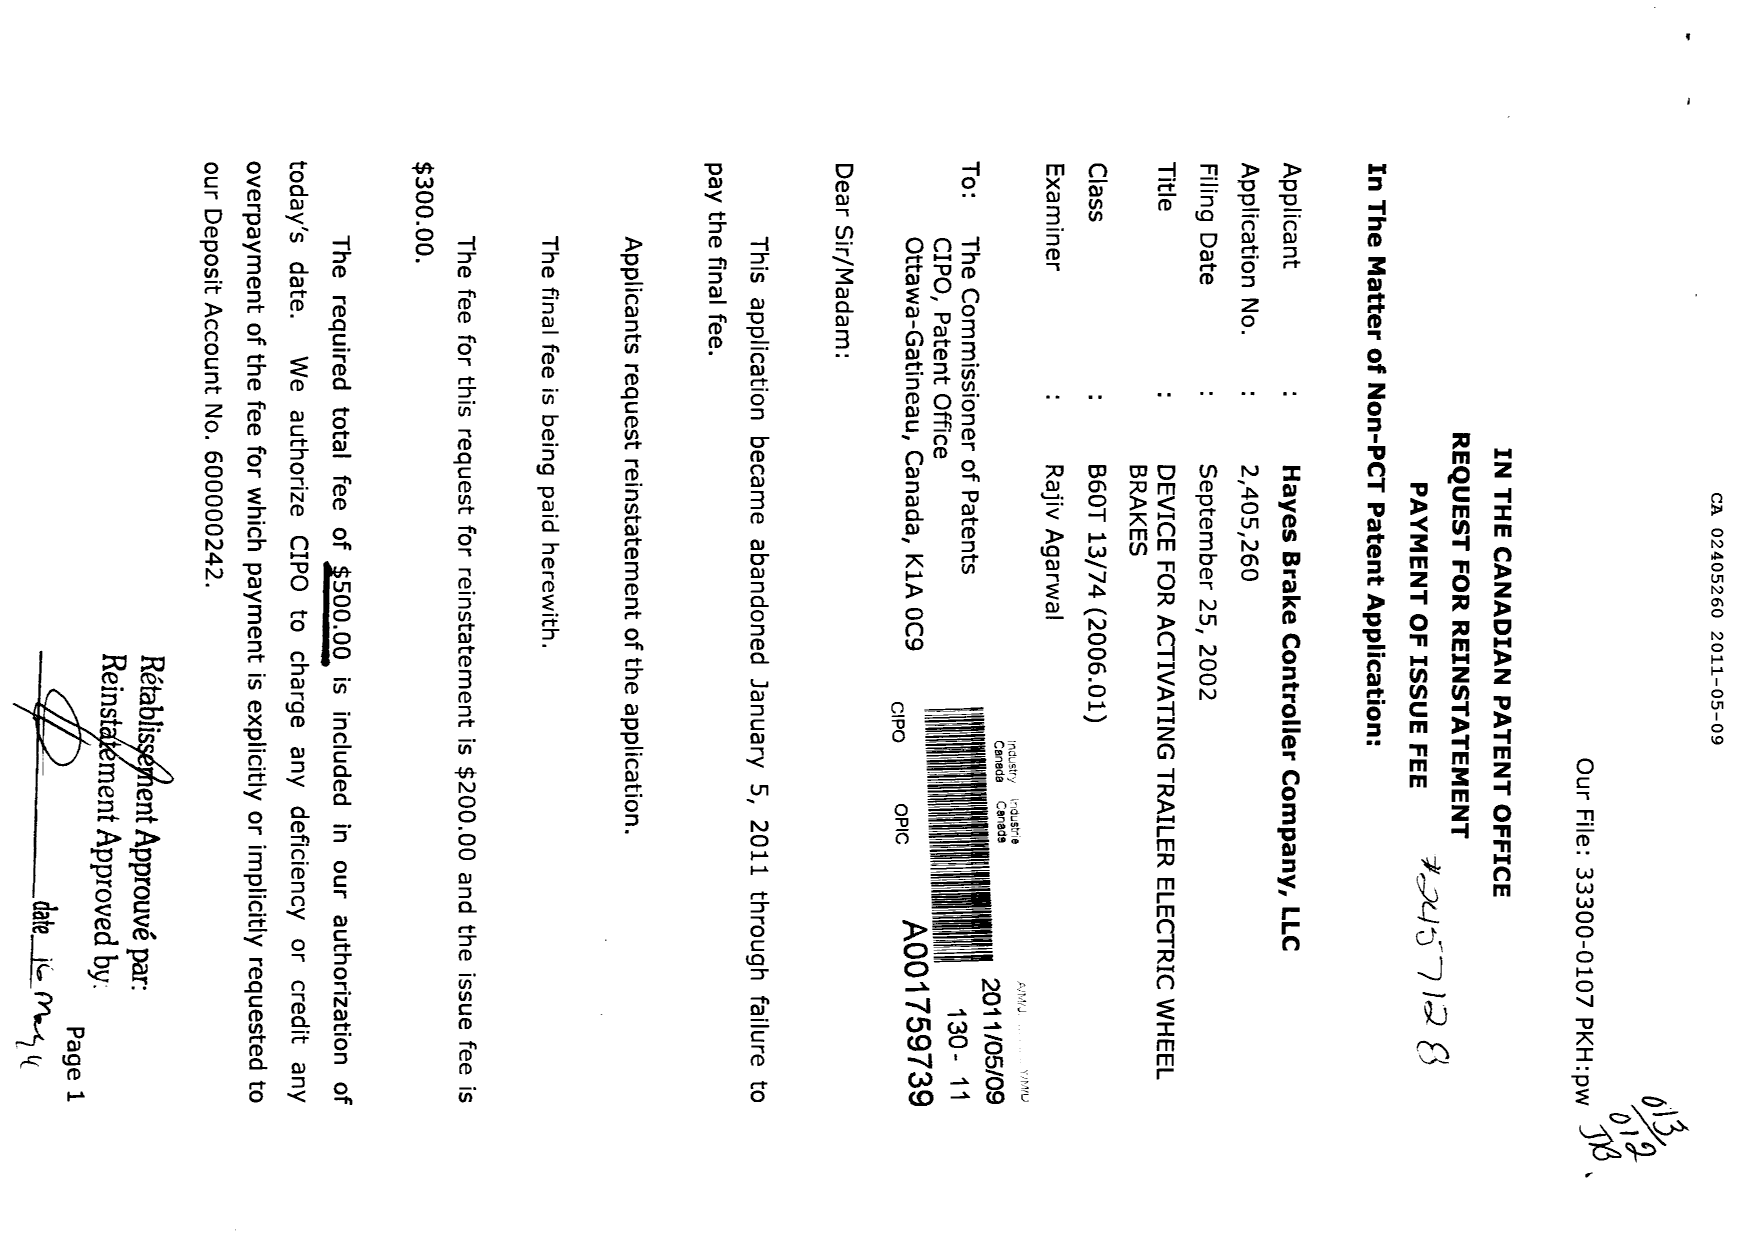 Canadian Patent Document 2405260. Correspondence 20110509. Image 1 of 2